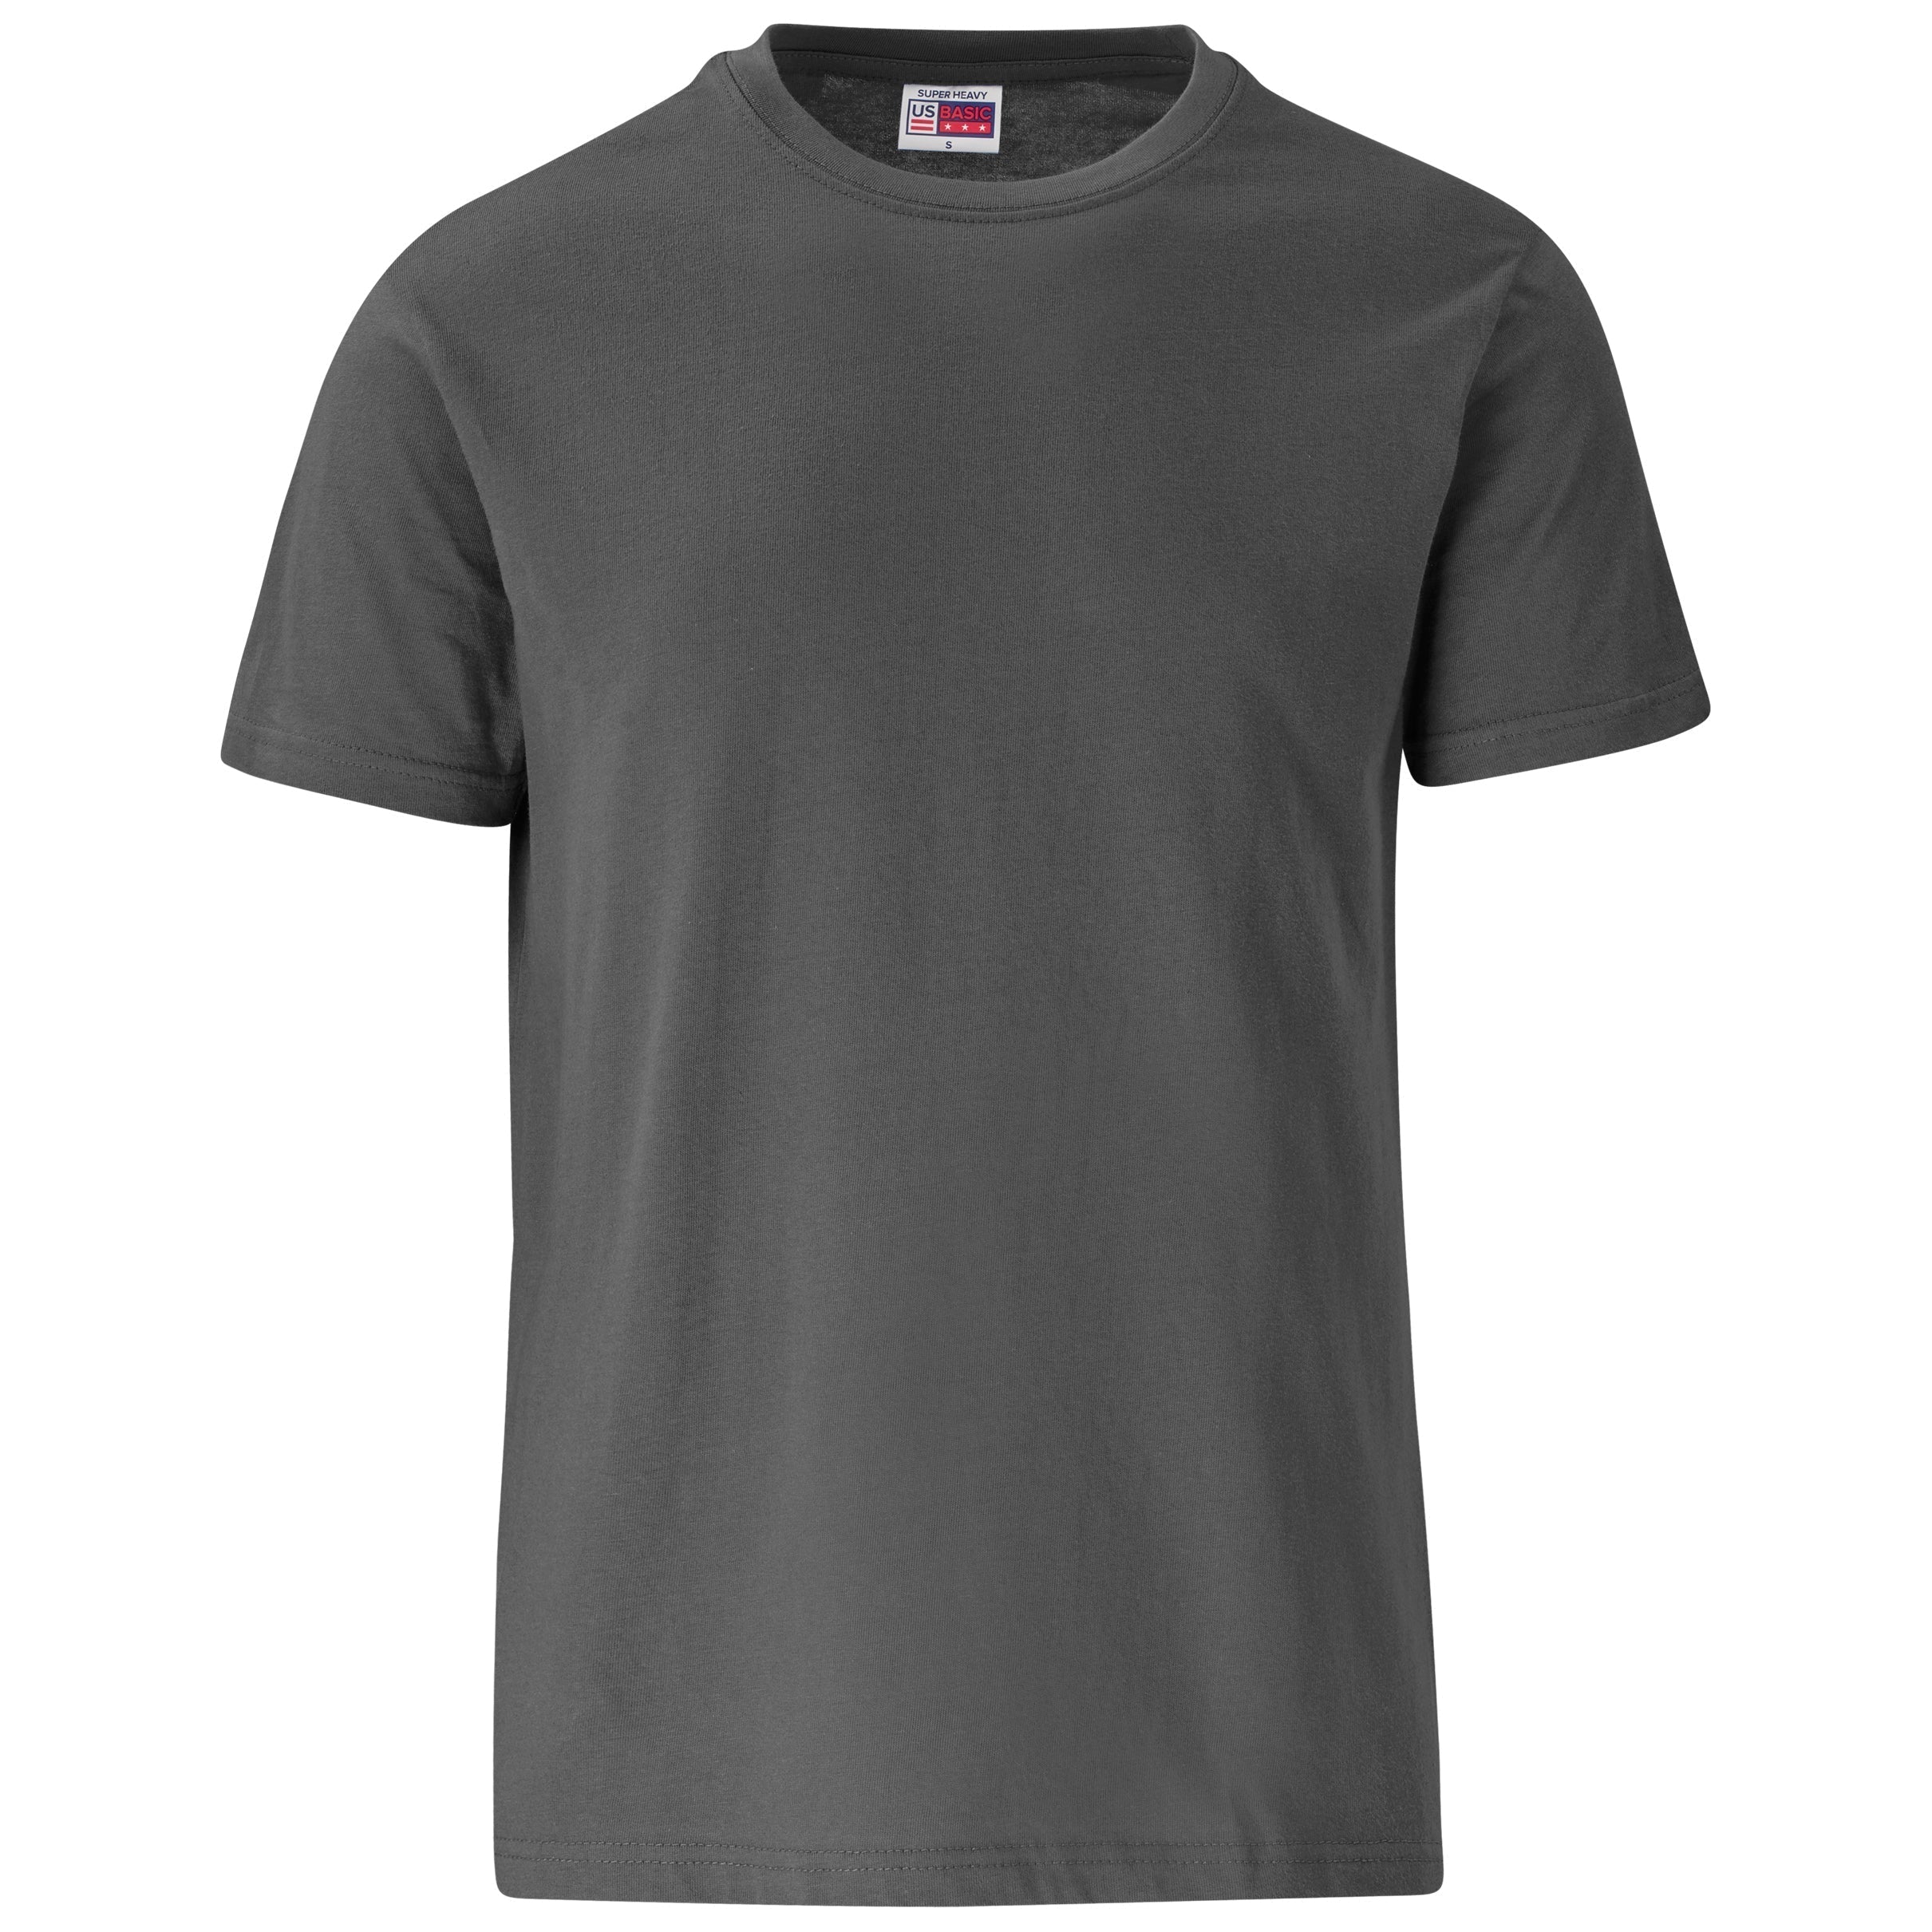 Unisex Super Club 180 T-Shirt-L-Dark Grey-DG2